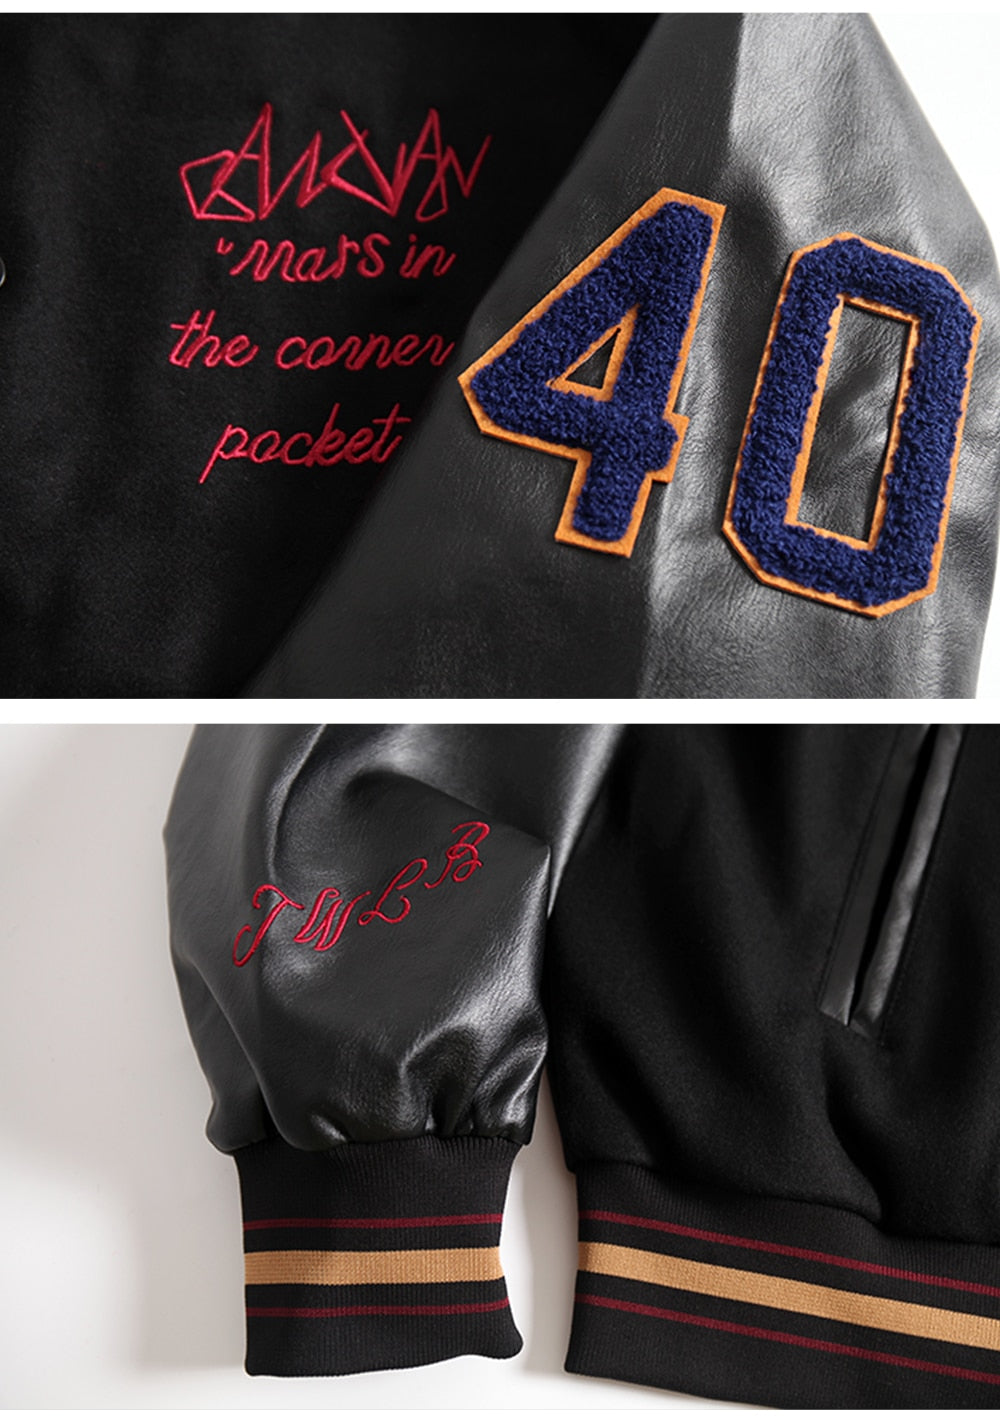 Majesda® - TWLB Baseball Jacket outfit ideas, streetwear fashion - majesda.com